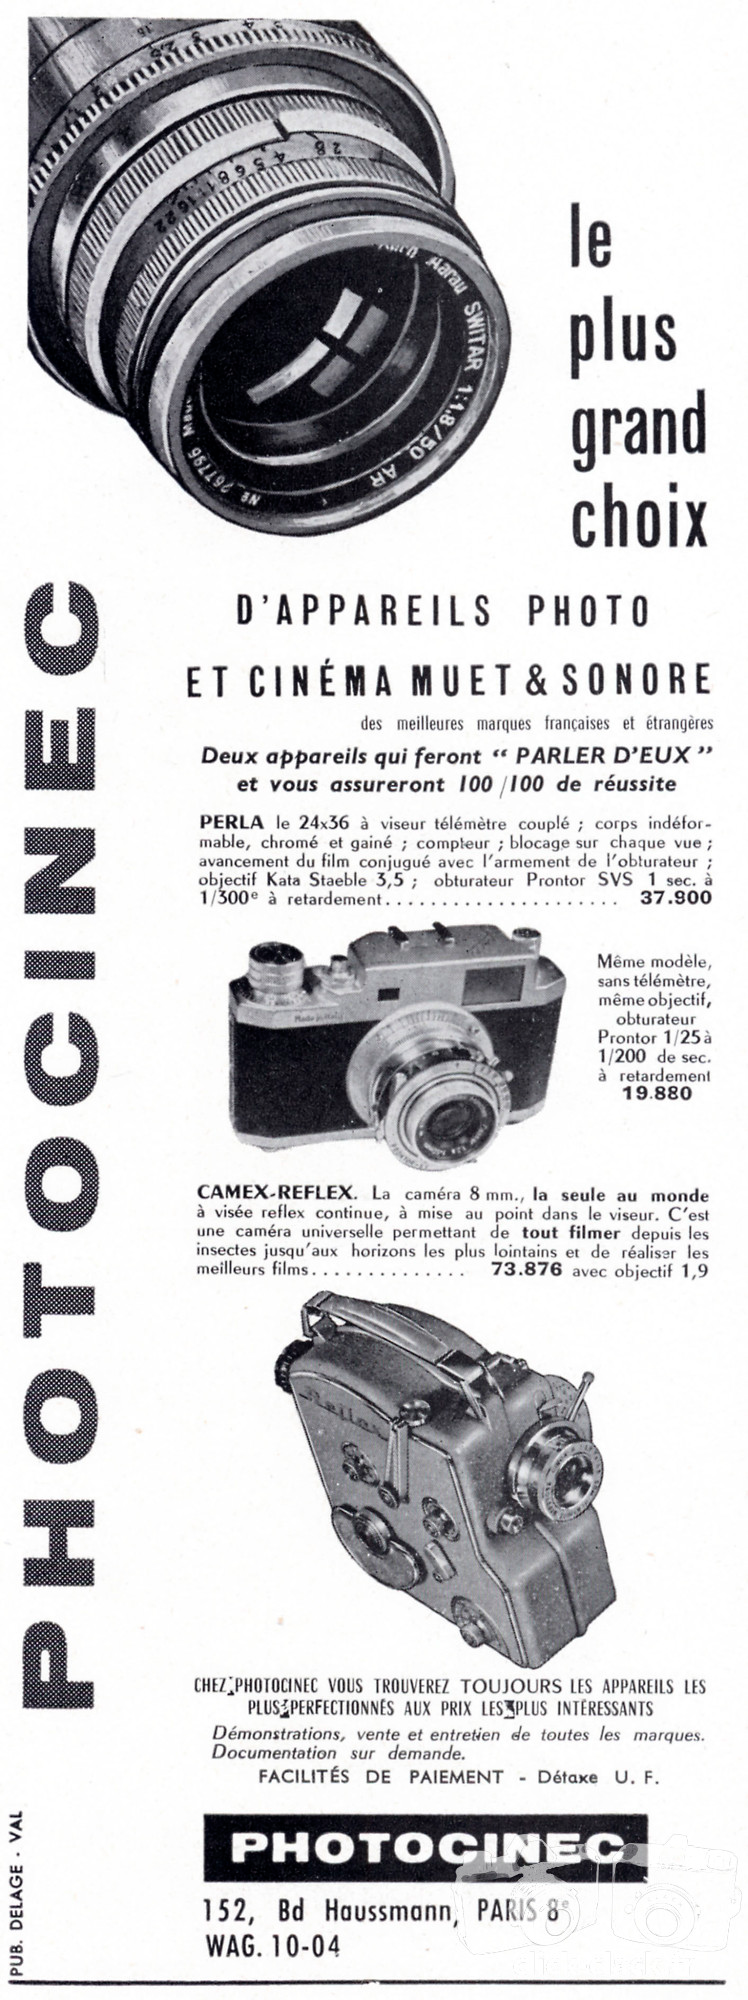 Photocinec - Perla, Camex-Reflex - 1957